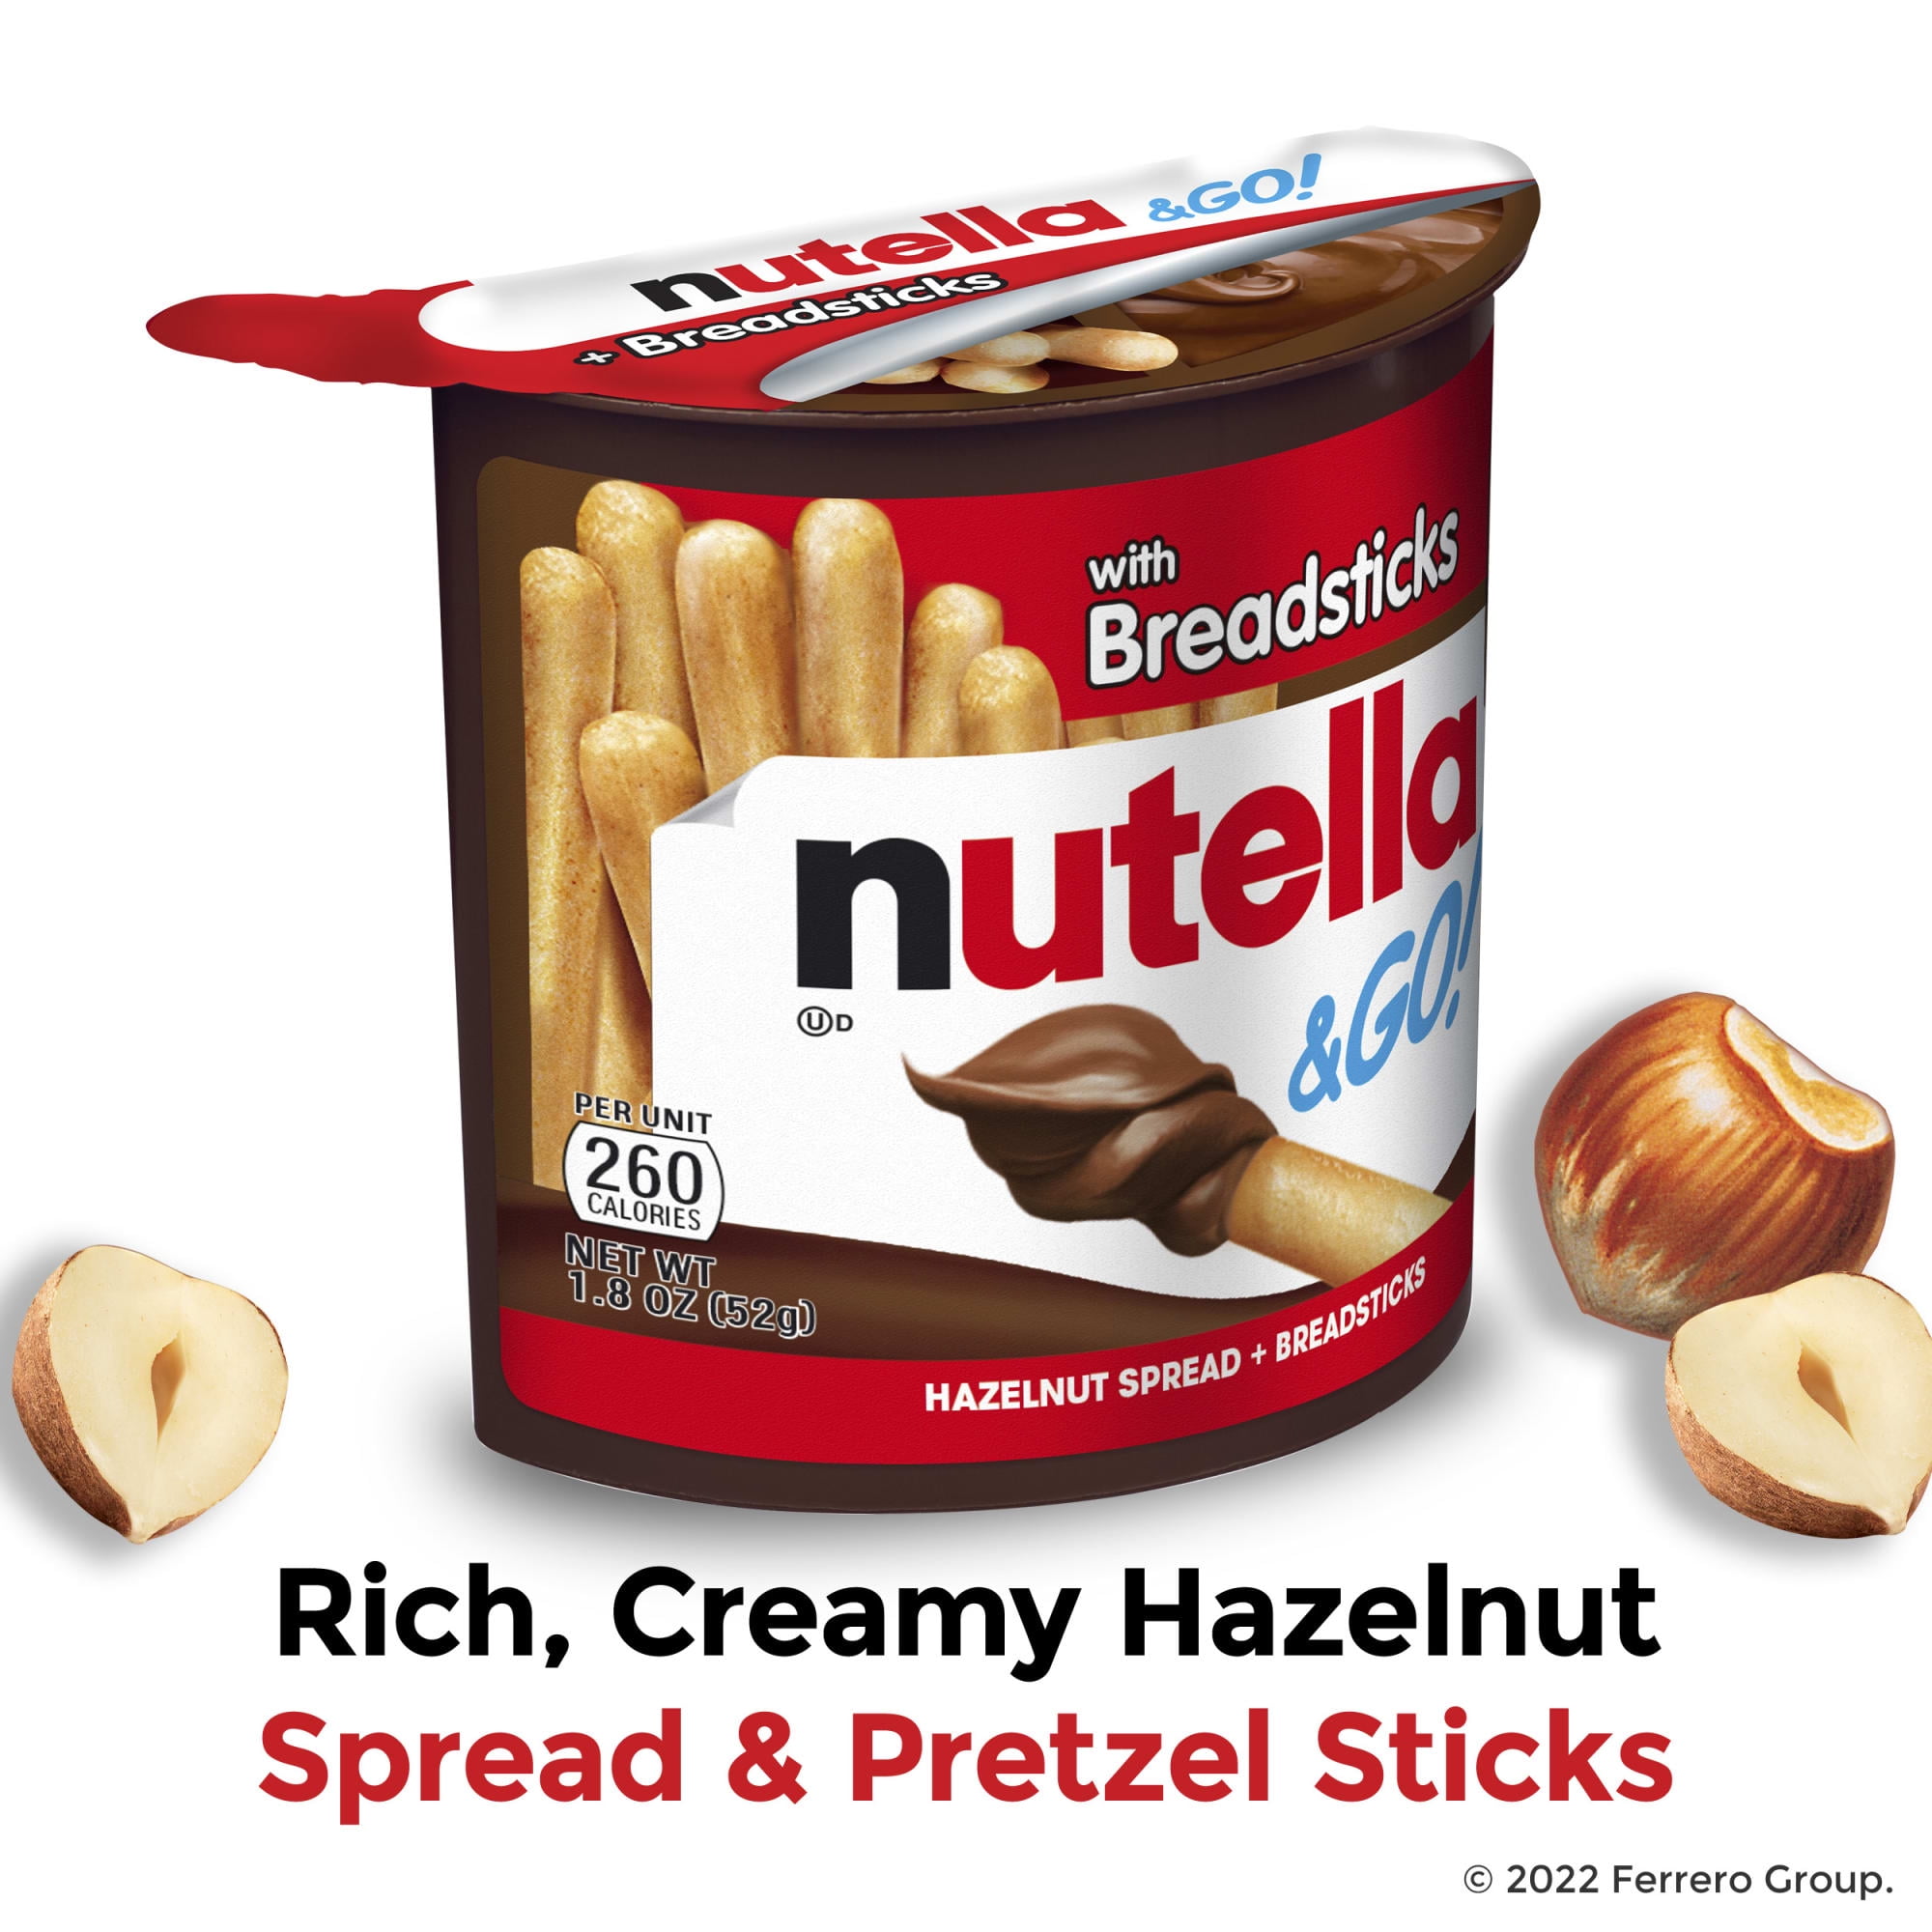 Nutella & Go Chocolate Hazelnut Spread with Breadsticks, 1.8 Oz (Pack of 48)